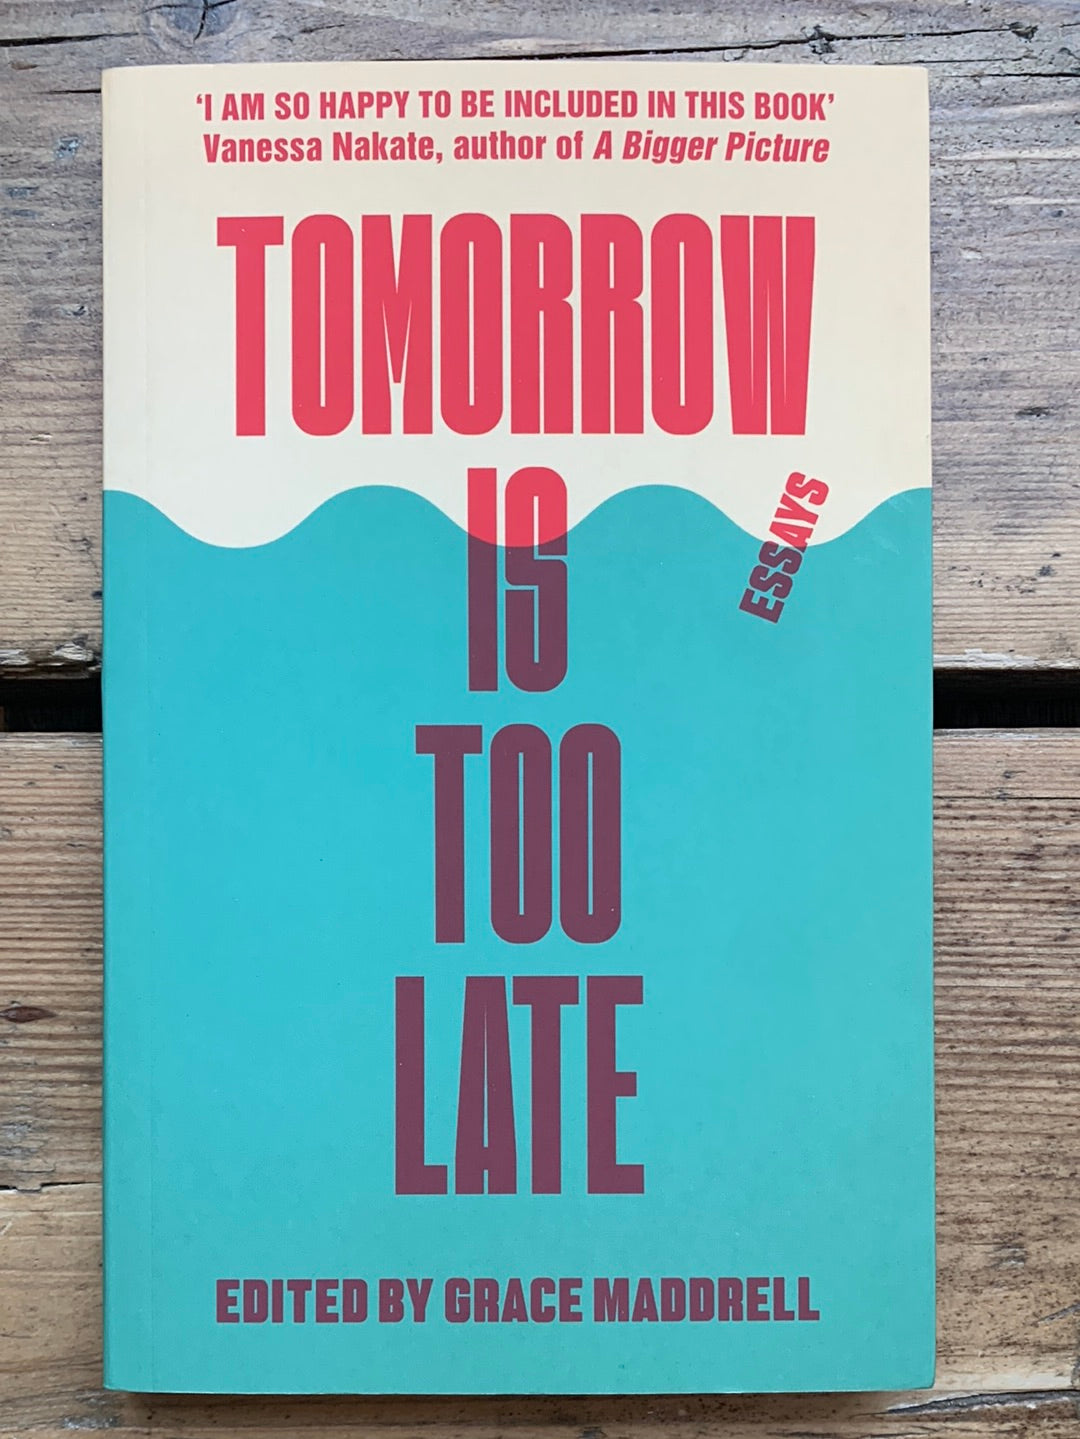 Tomorrow Is Too Late